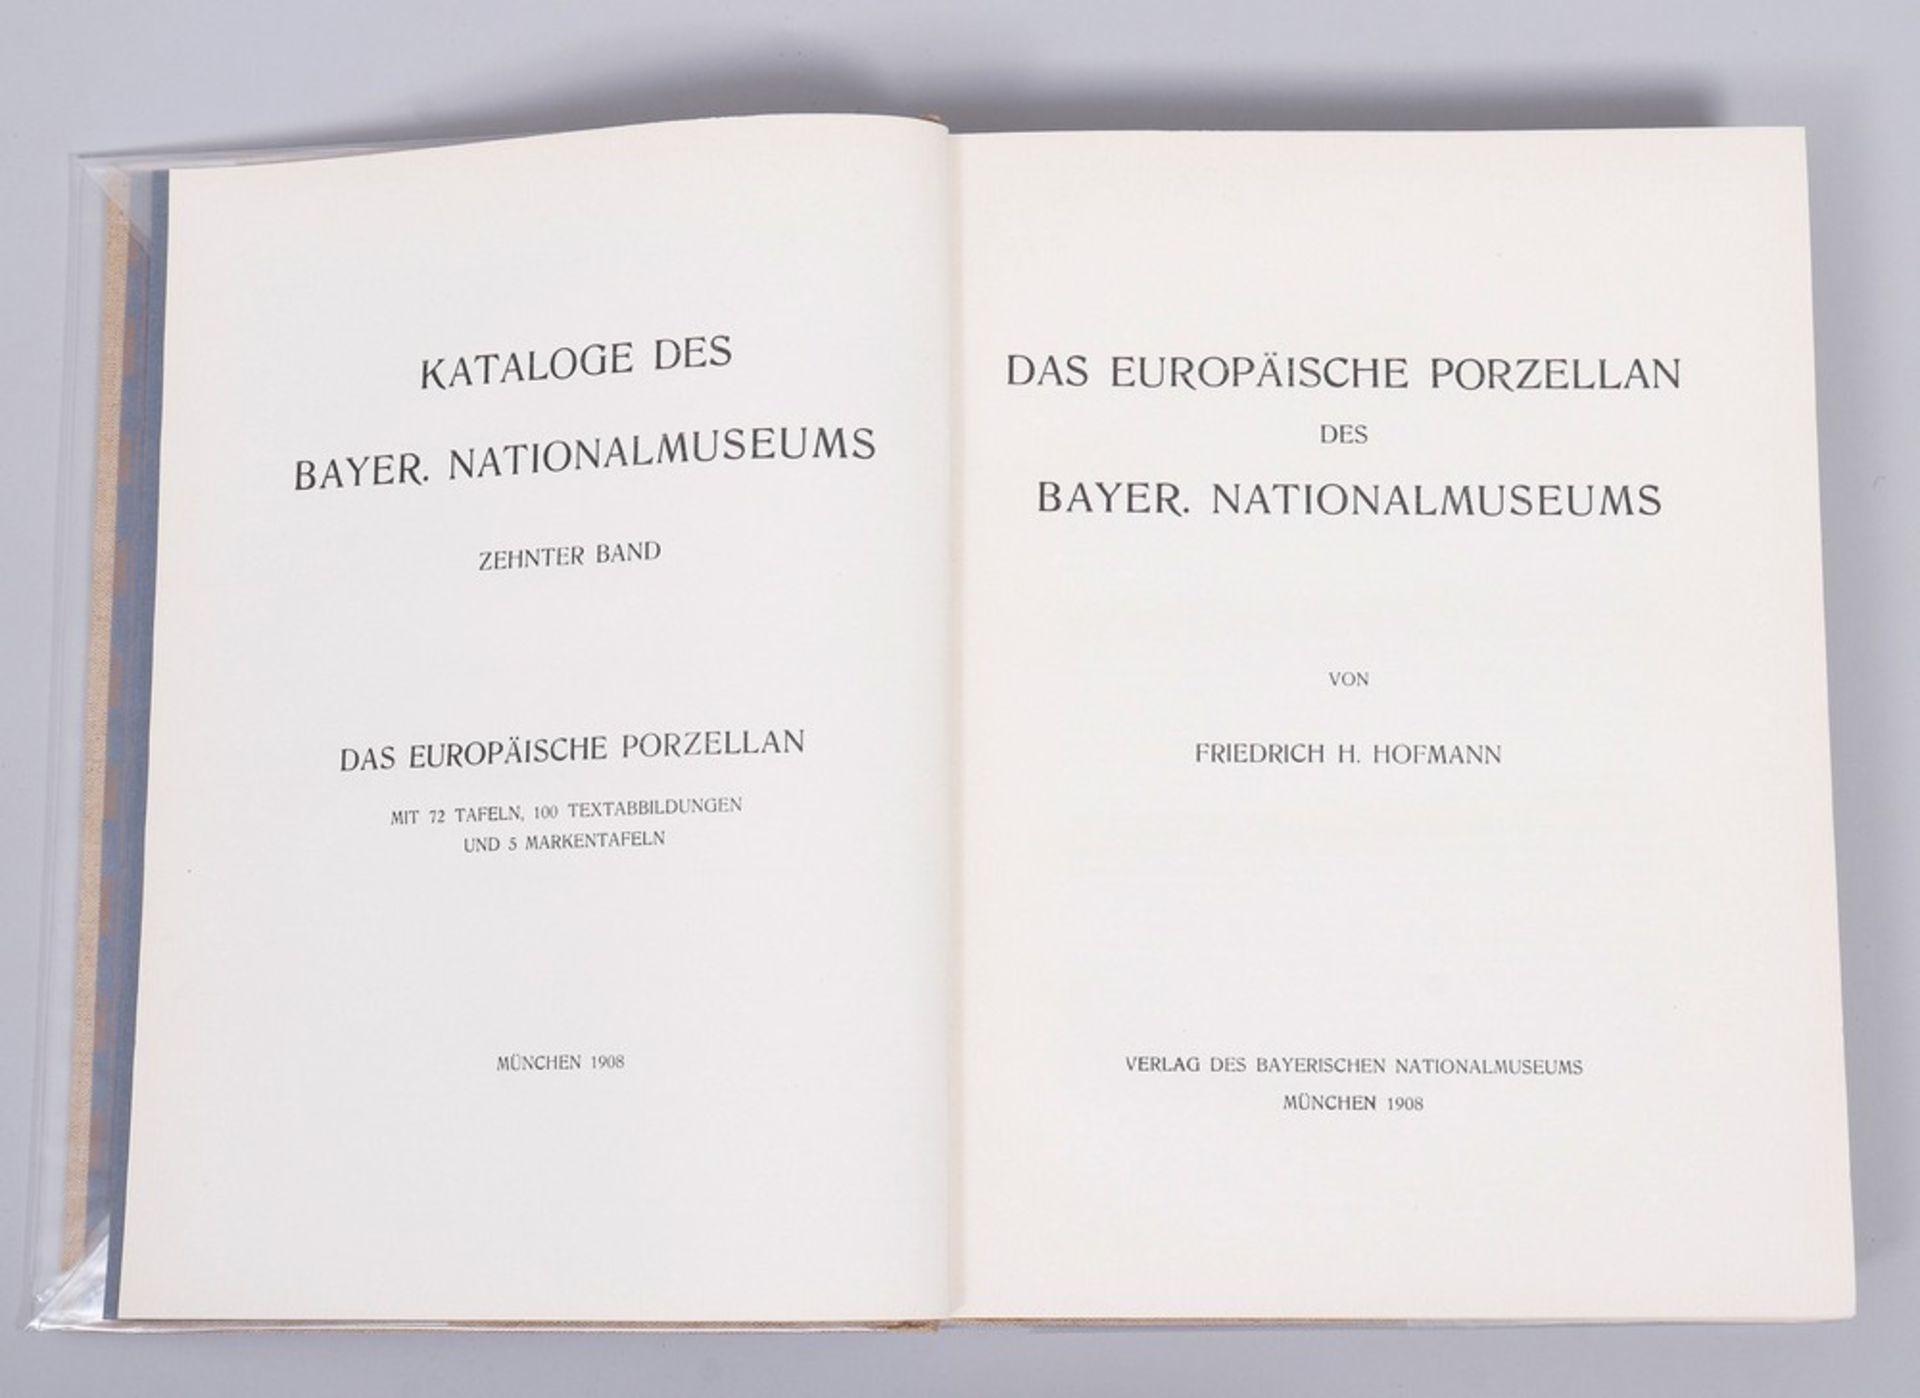 Book, Friedrich H. Hofmann, "Das europäische Porzellan des Bayerischen Nationalmuseums" - Image 2 of 2